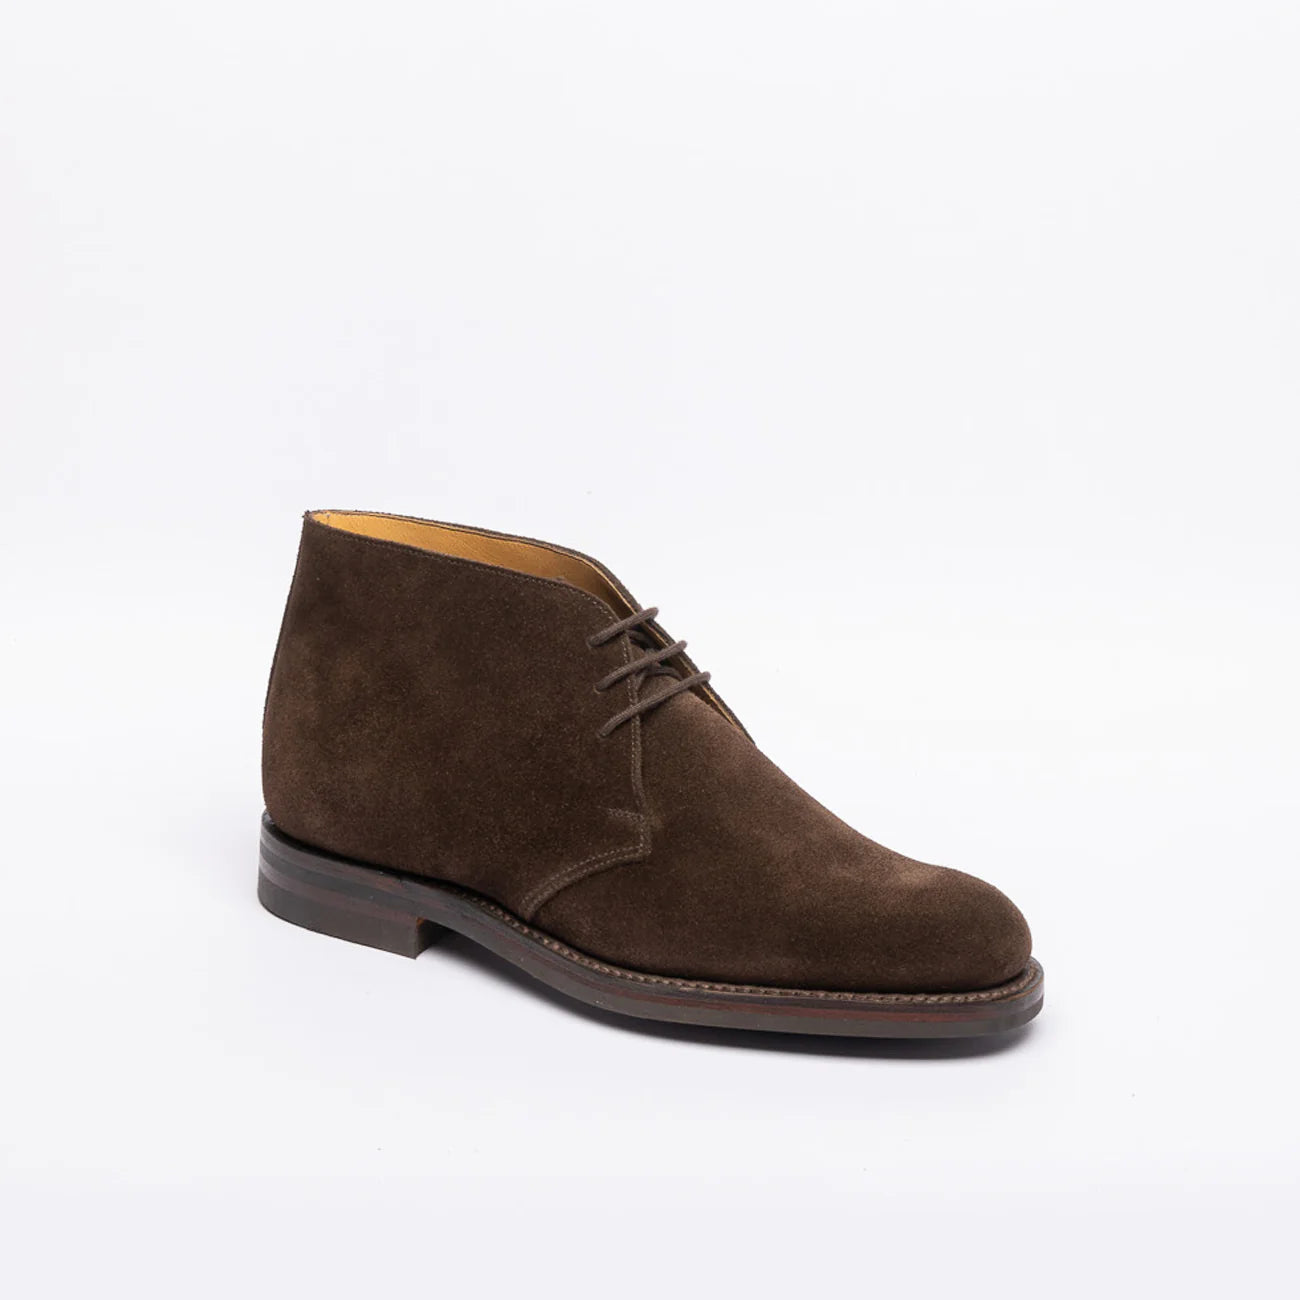 Crockett &amp; Jones Chiltern 2 ankle boot in brown suede